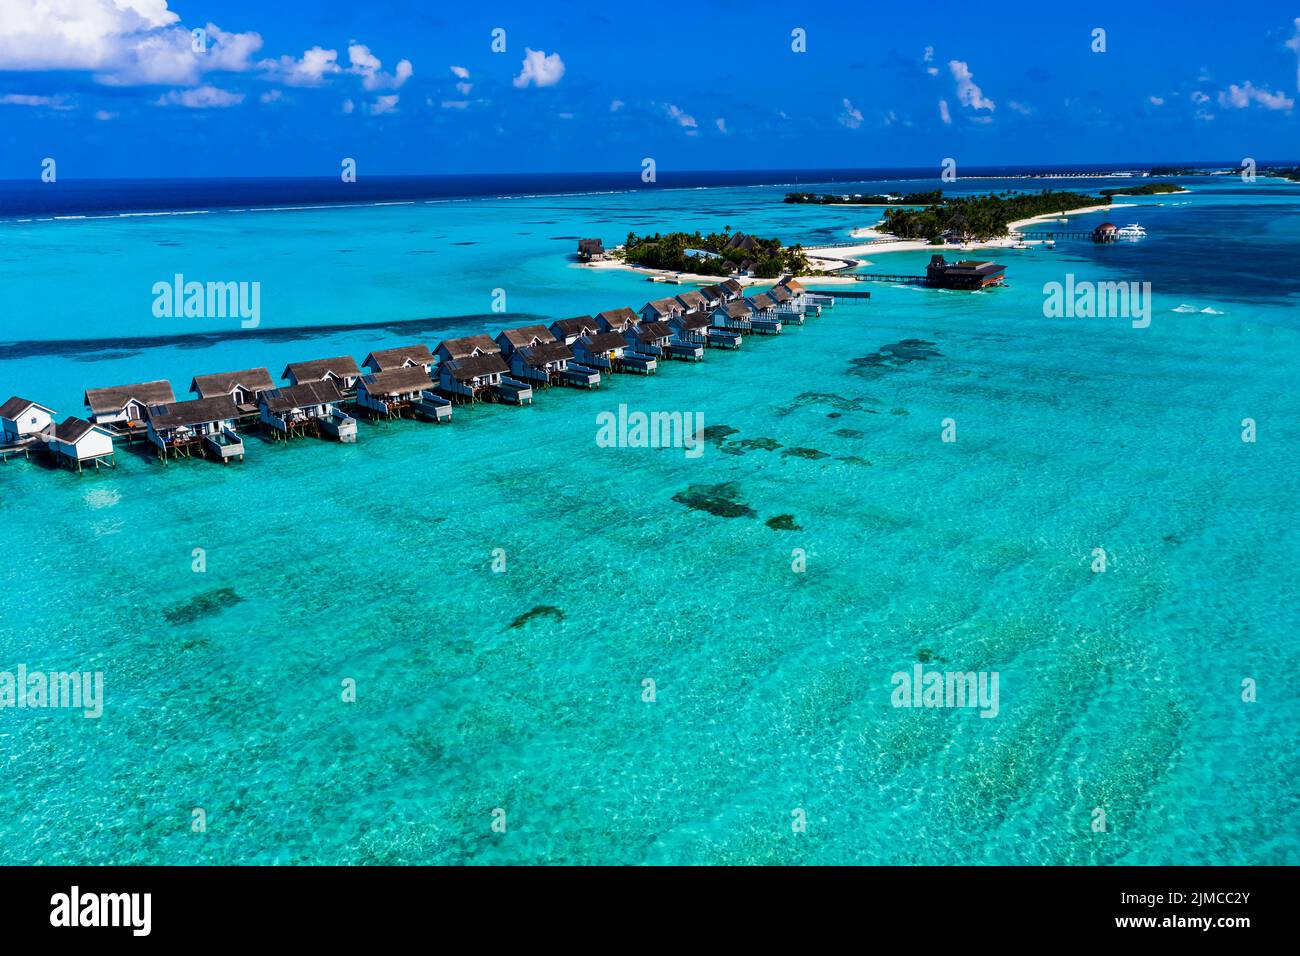 Aerial view, Lagoon of the Maldives island Maadhoo, South Male Atoll, Maldives Stock Photo